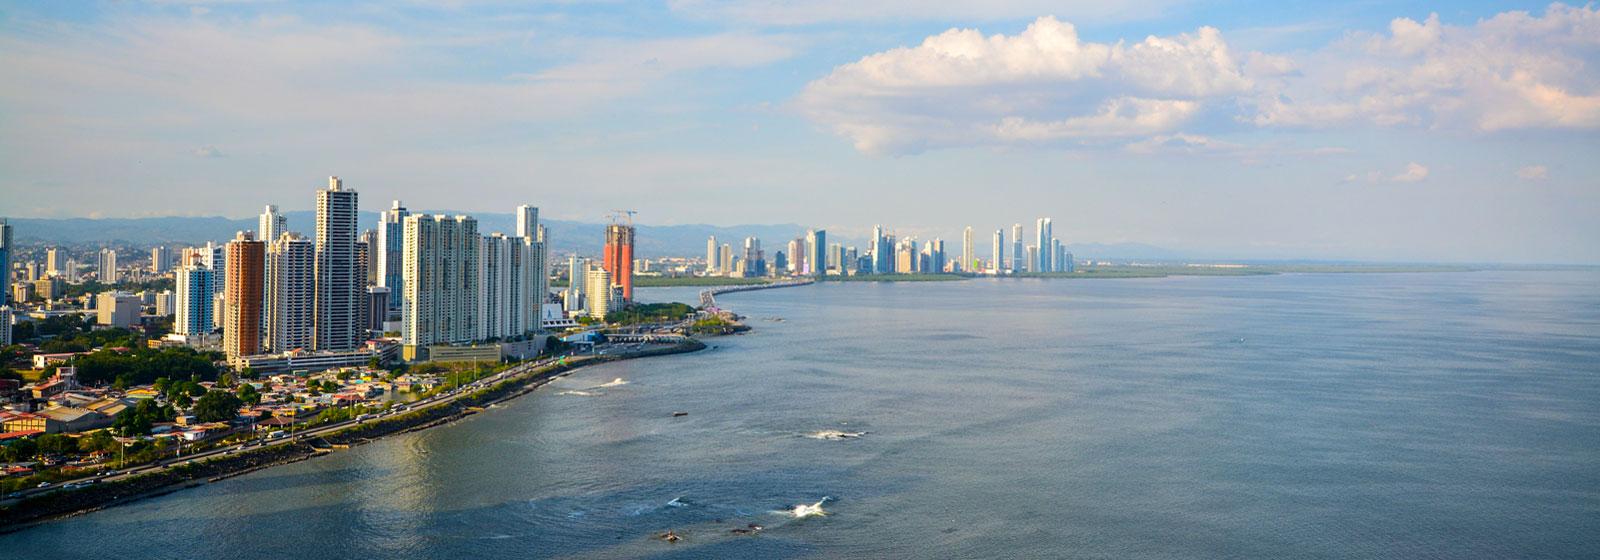 Pre-Construction Real Estate Sales in Panama City